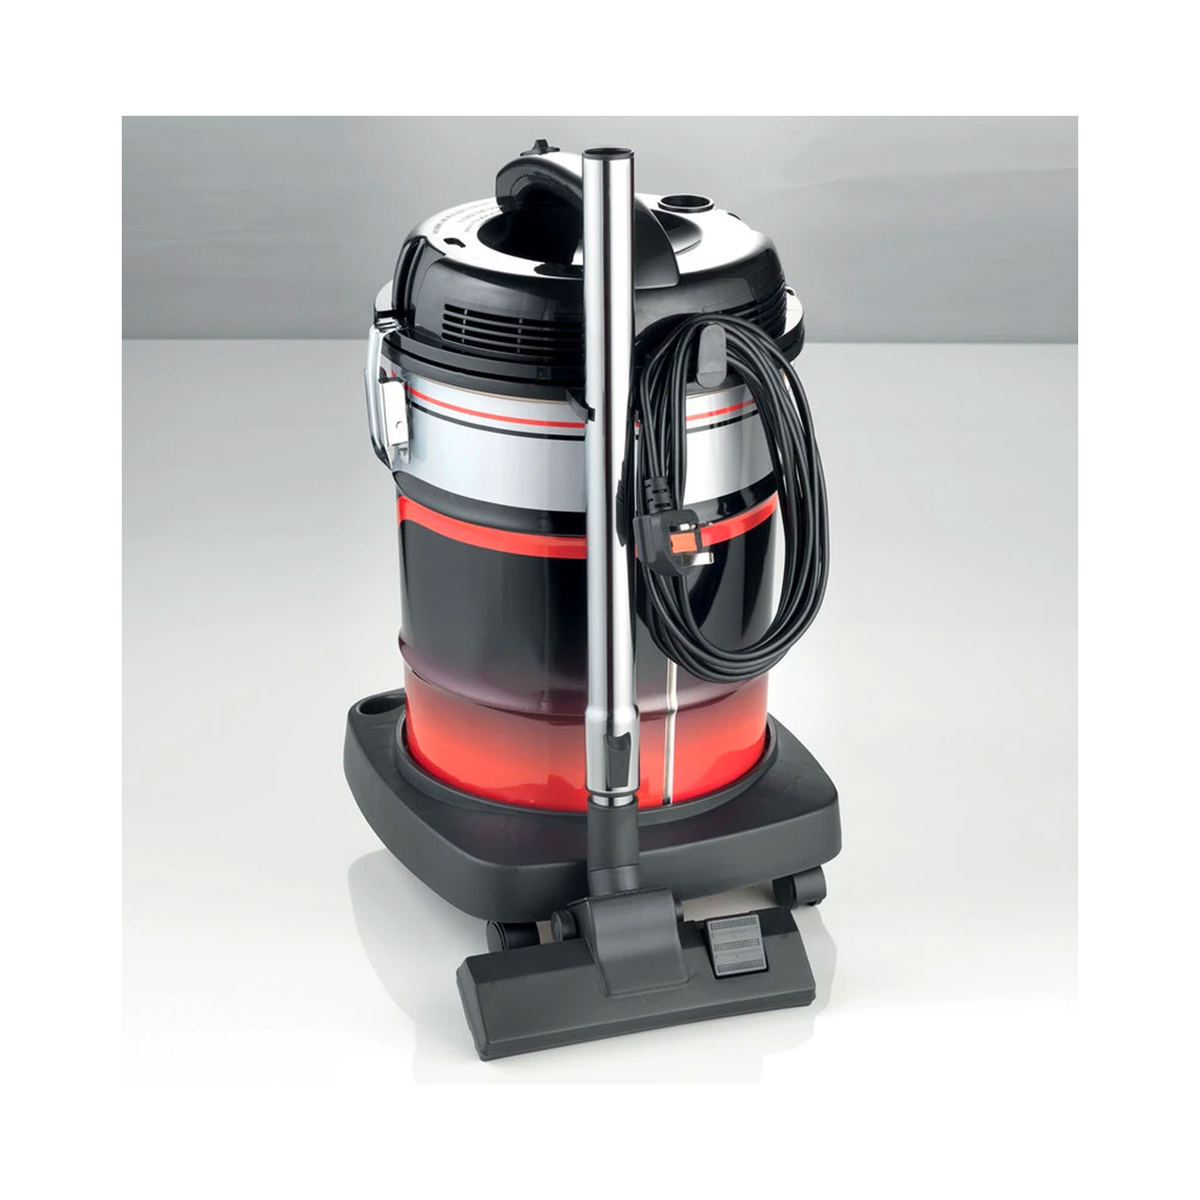 Kenwood Drum Vacuum Cleaner,2200W, 25LTR - VDM60.000BR